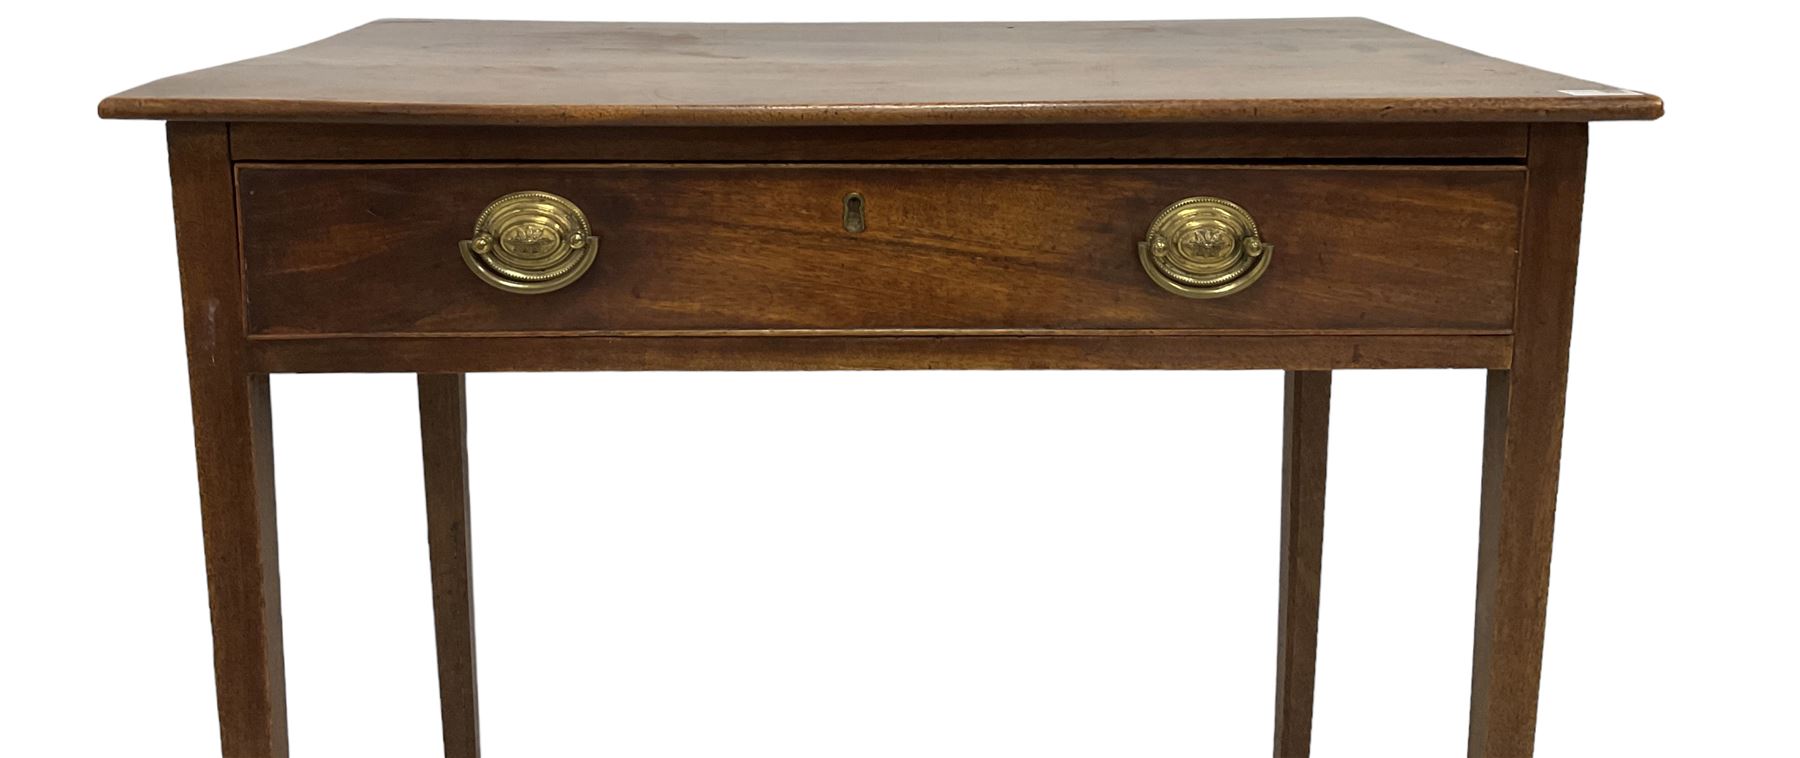 George III mahogany side table - Image 5 of 6